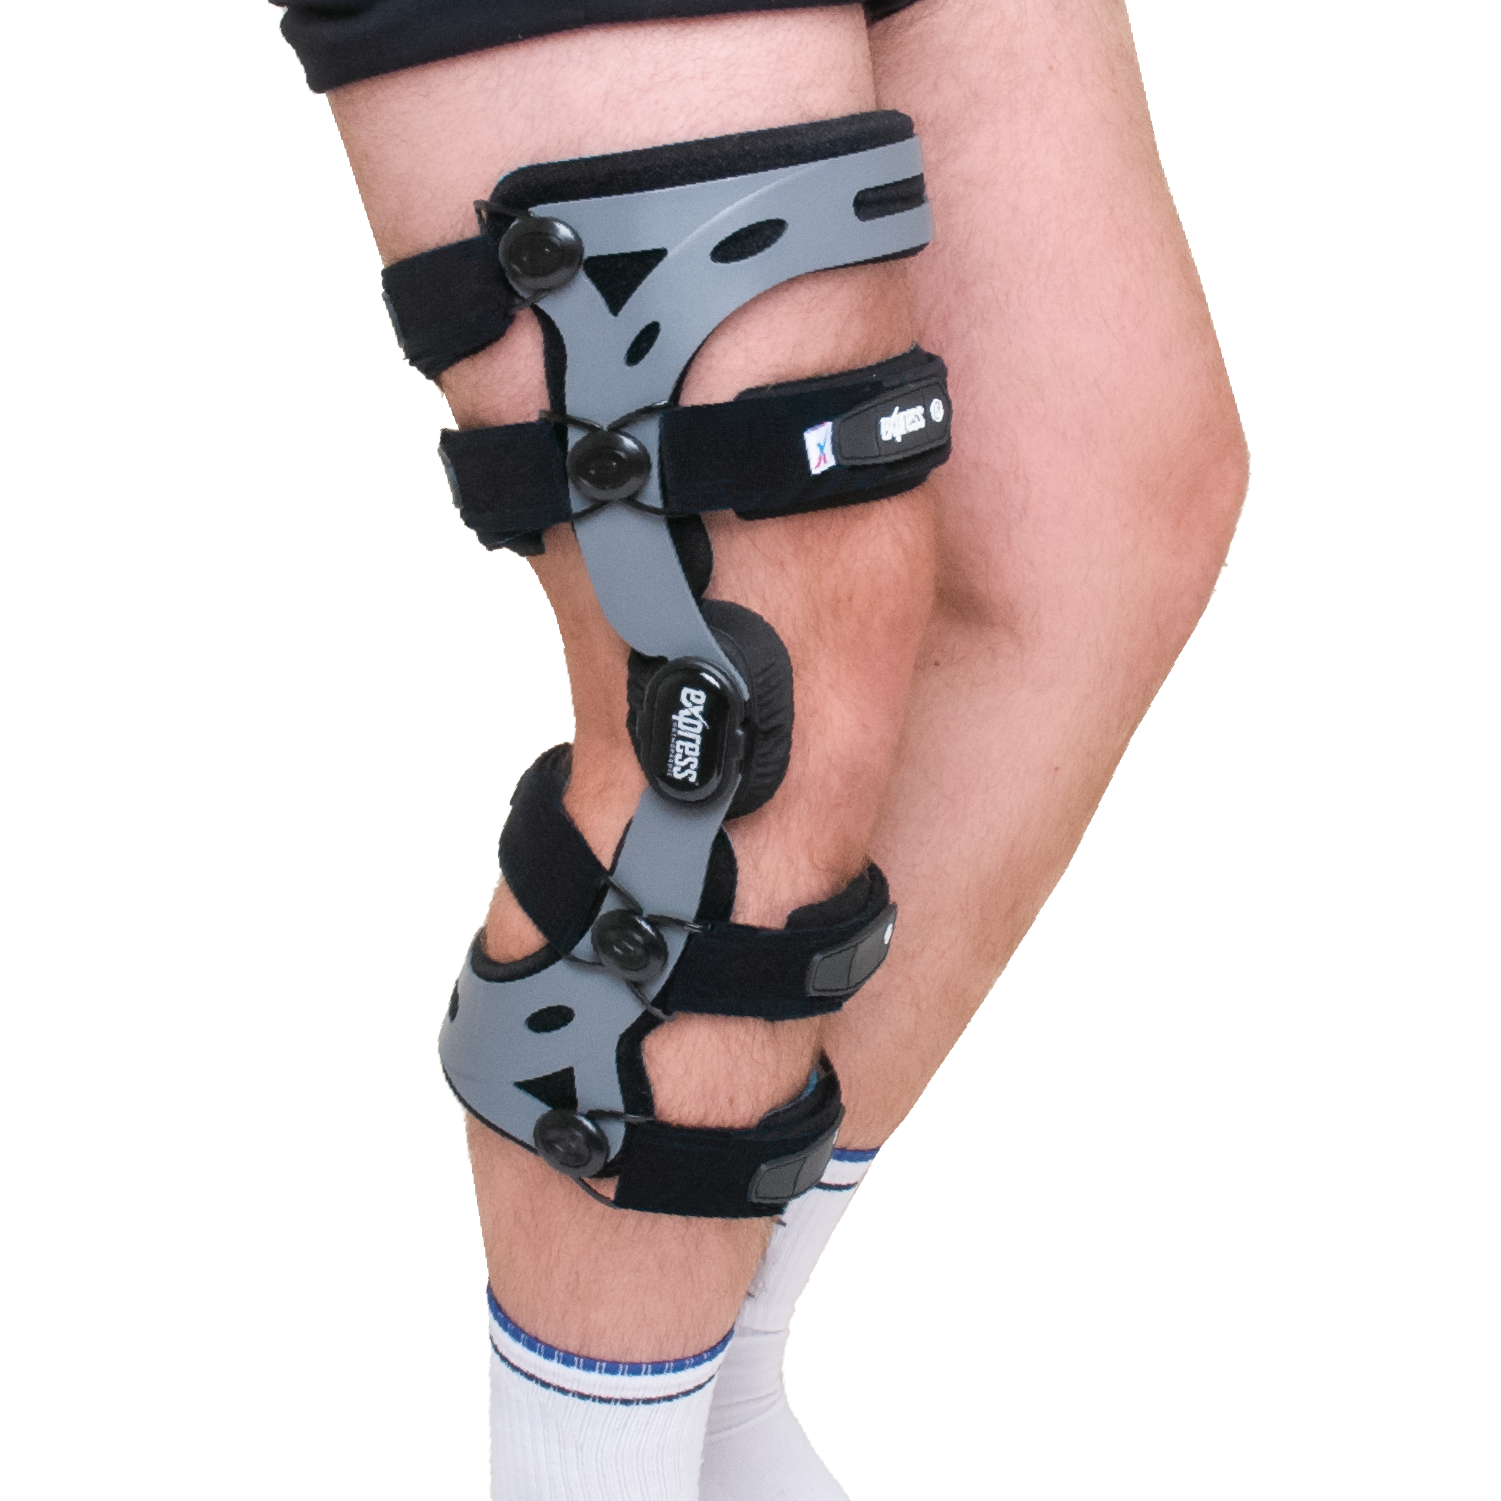 Express Orthopaedic® Rigid Functional Knee Brace